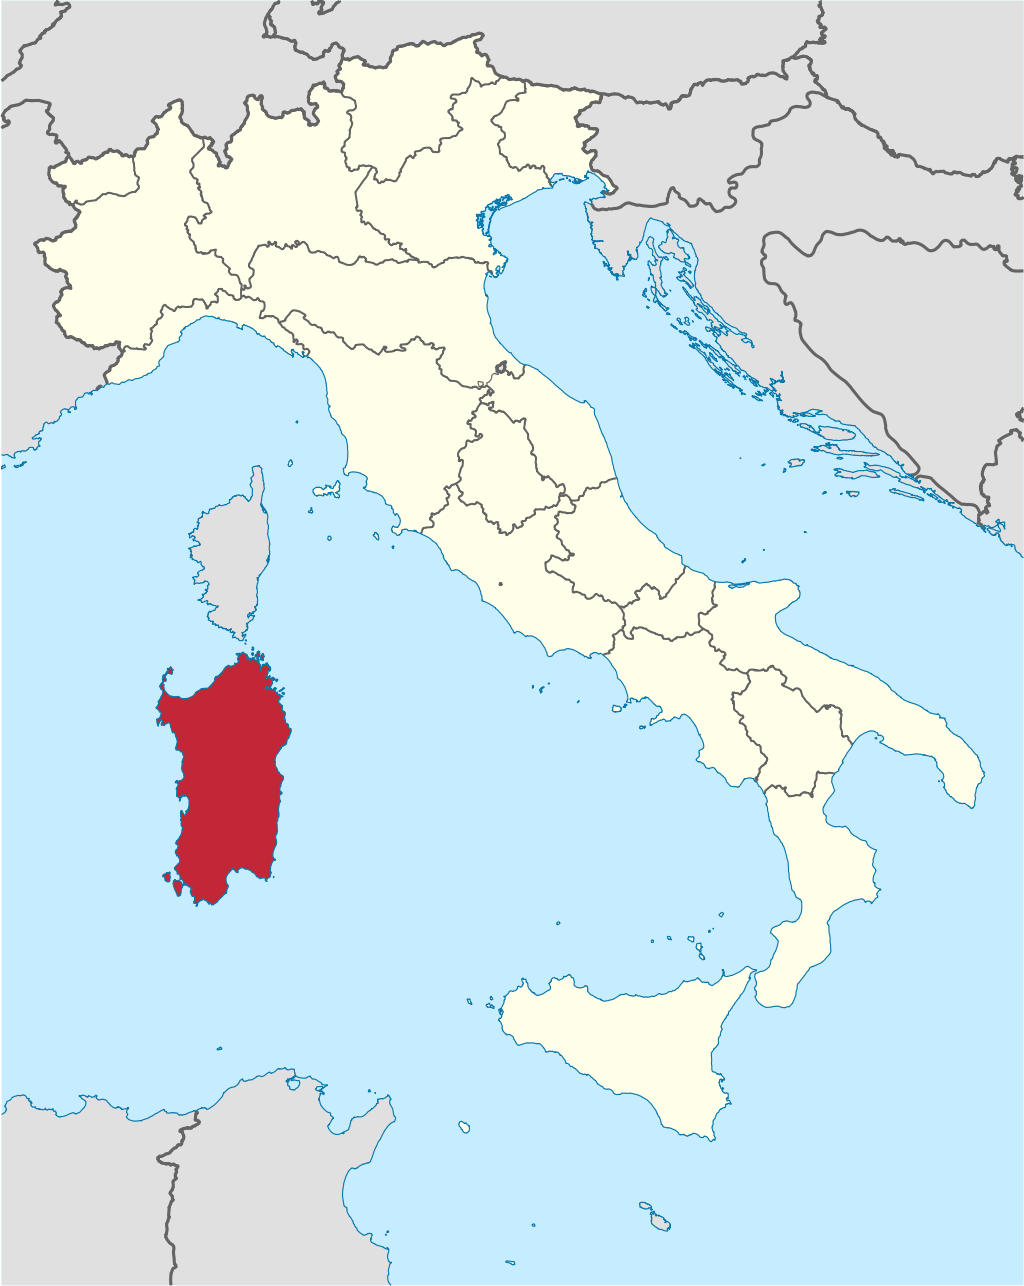 Cedrino House Urbex location or around the region Sardegna (Nuoro), Italy